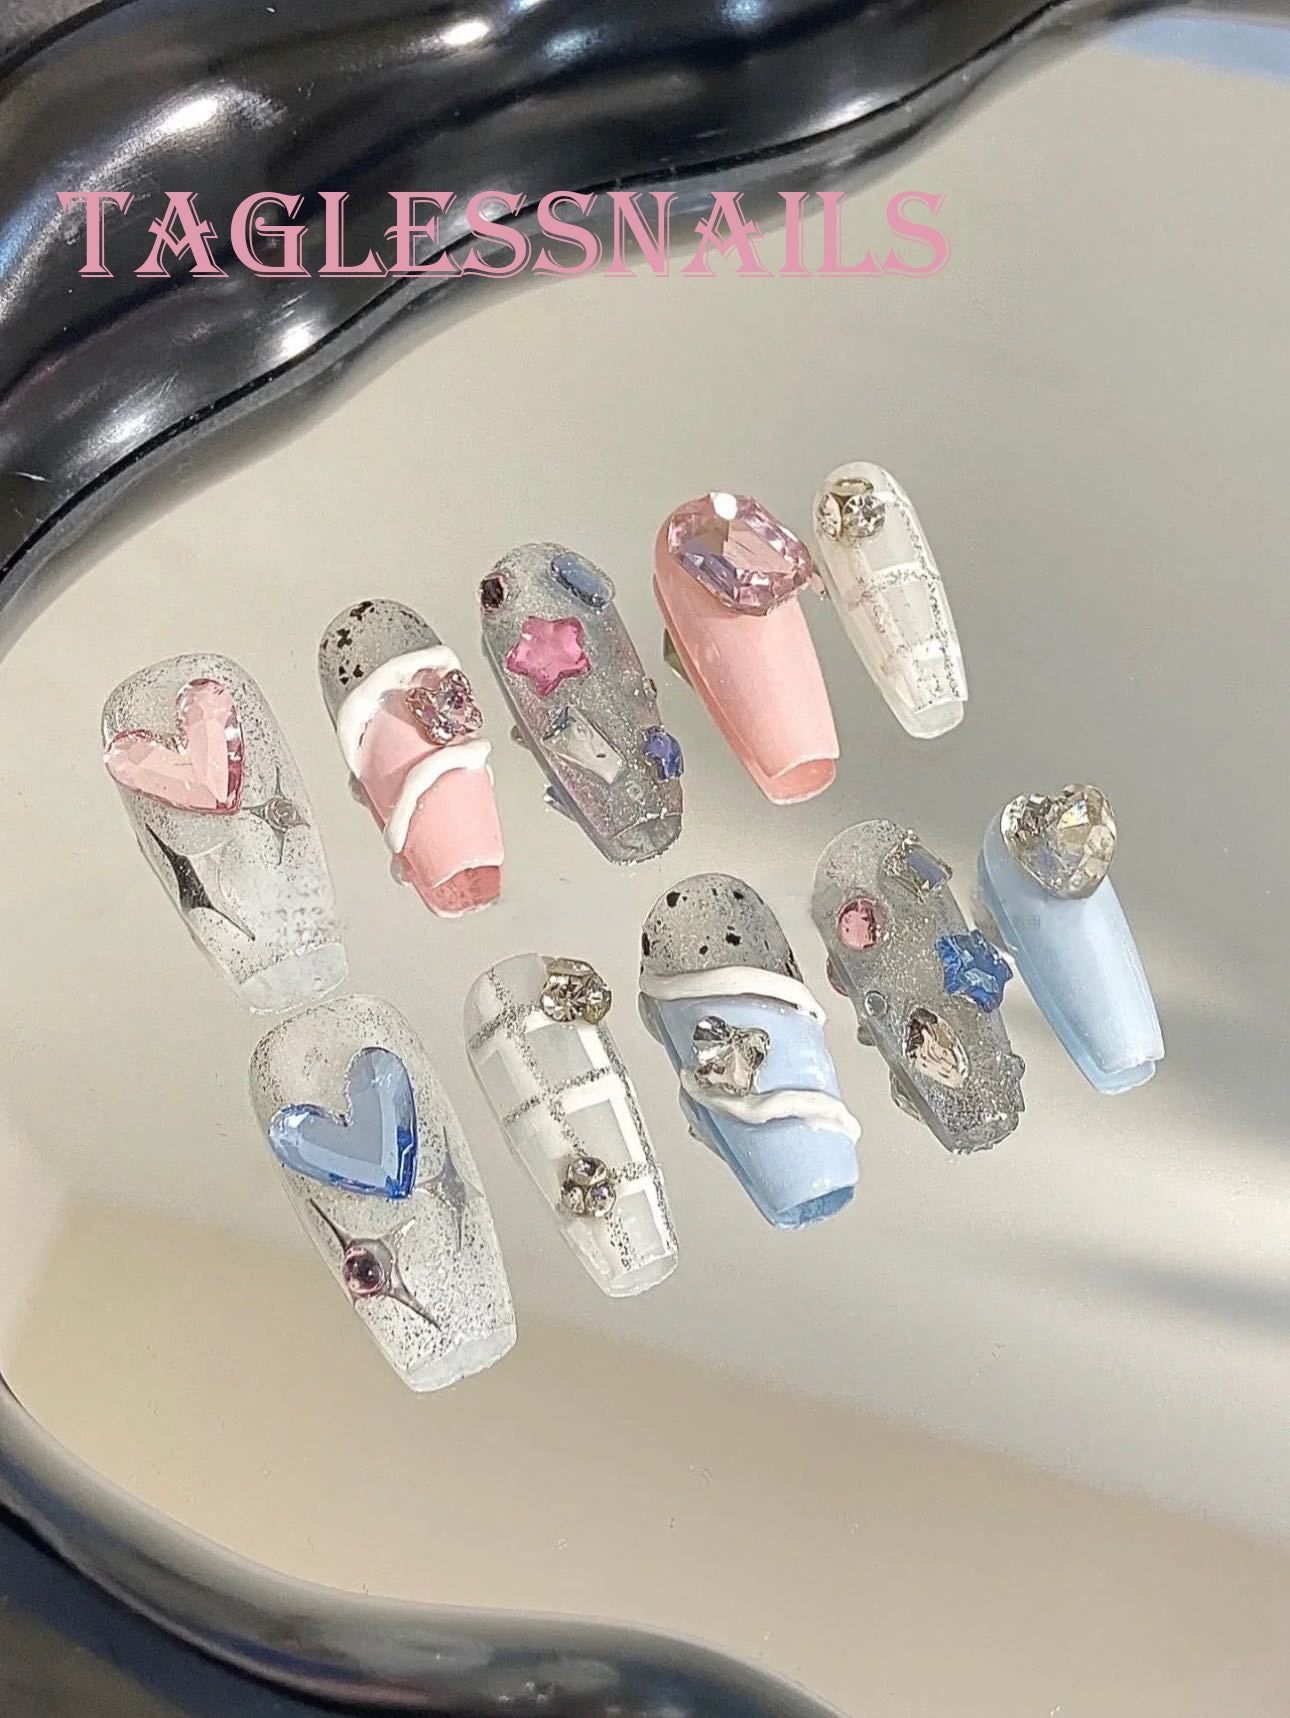 Sweet Heart - Long Handmade Cute Heart Press-On Nails TAGLESSNAILS